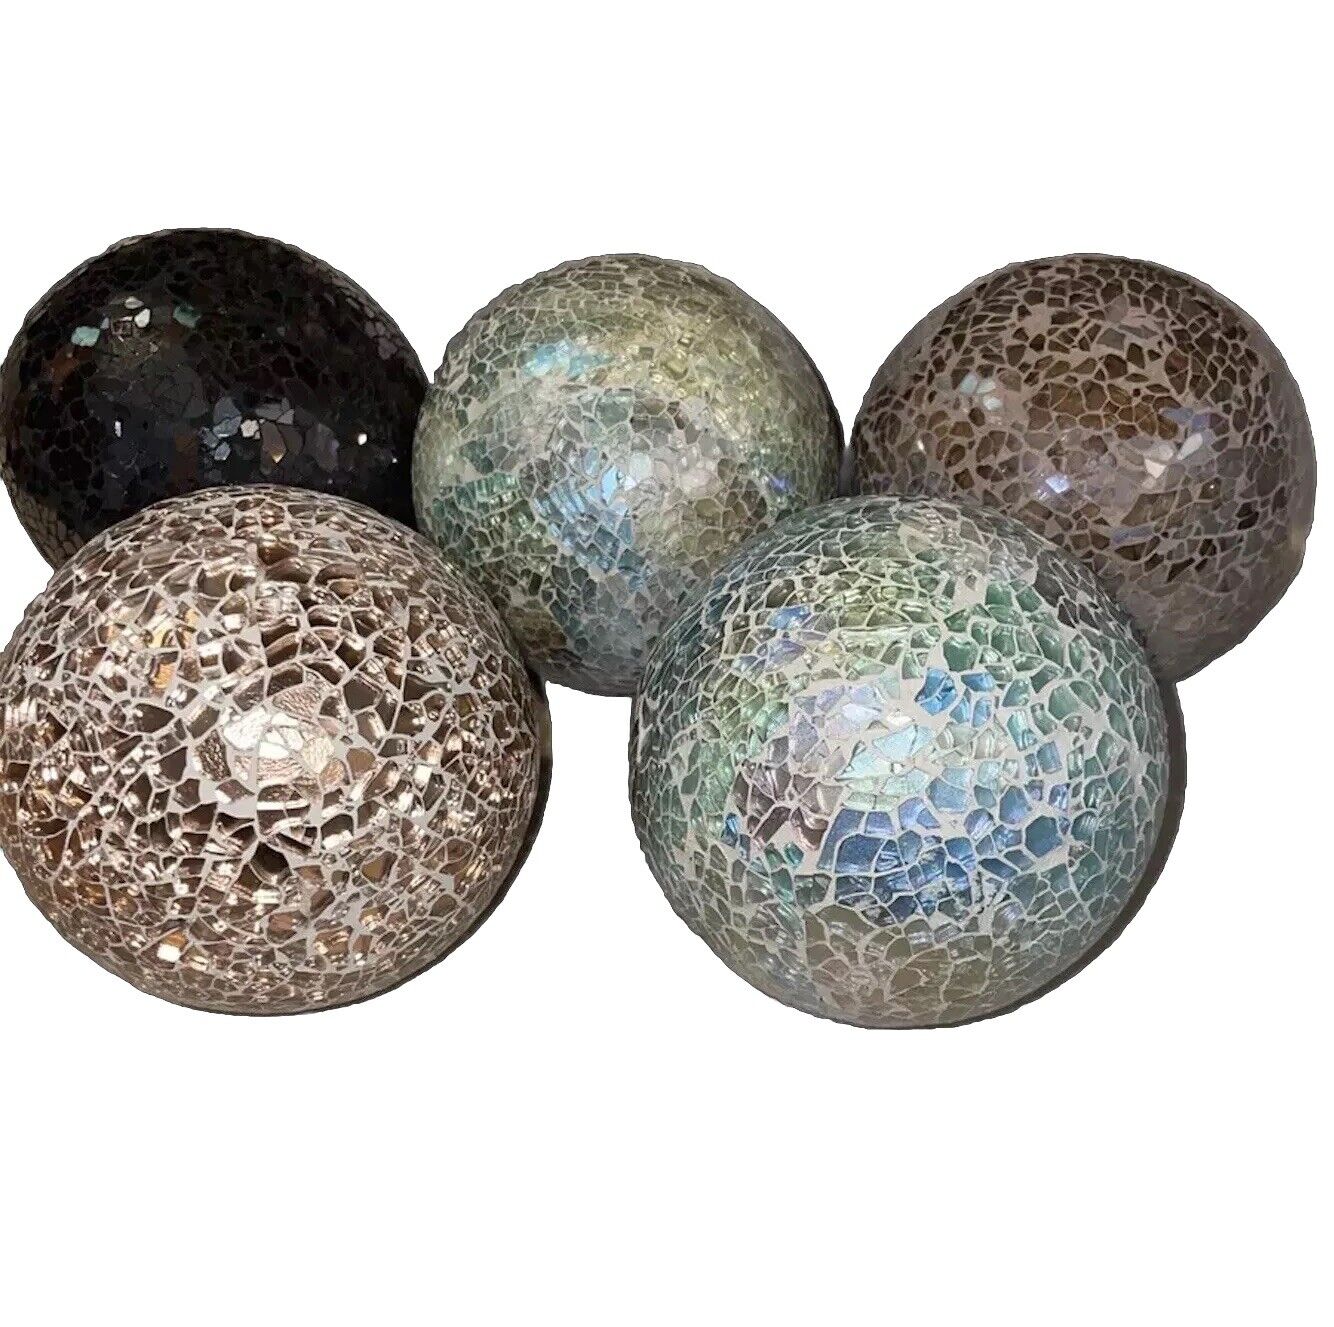 5 Piece set Mosaic Sphere Ball Orbs Decorative Centerpiece